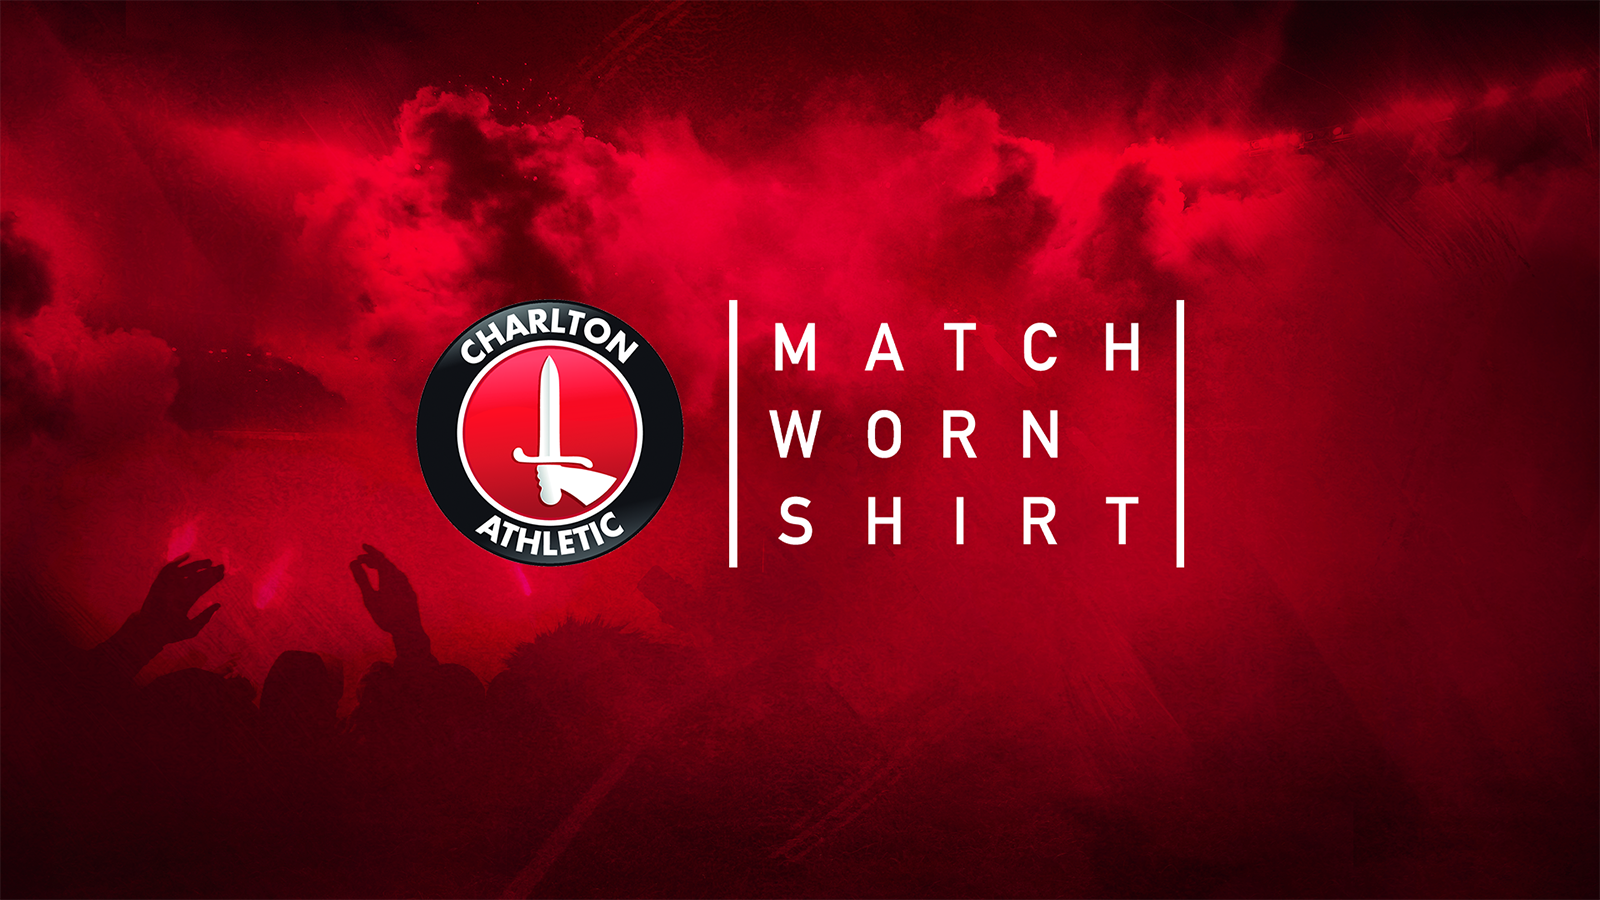 Charlton and MatchWornShirt logos